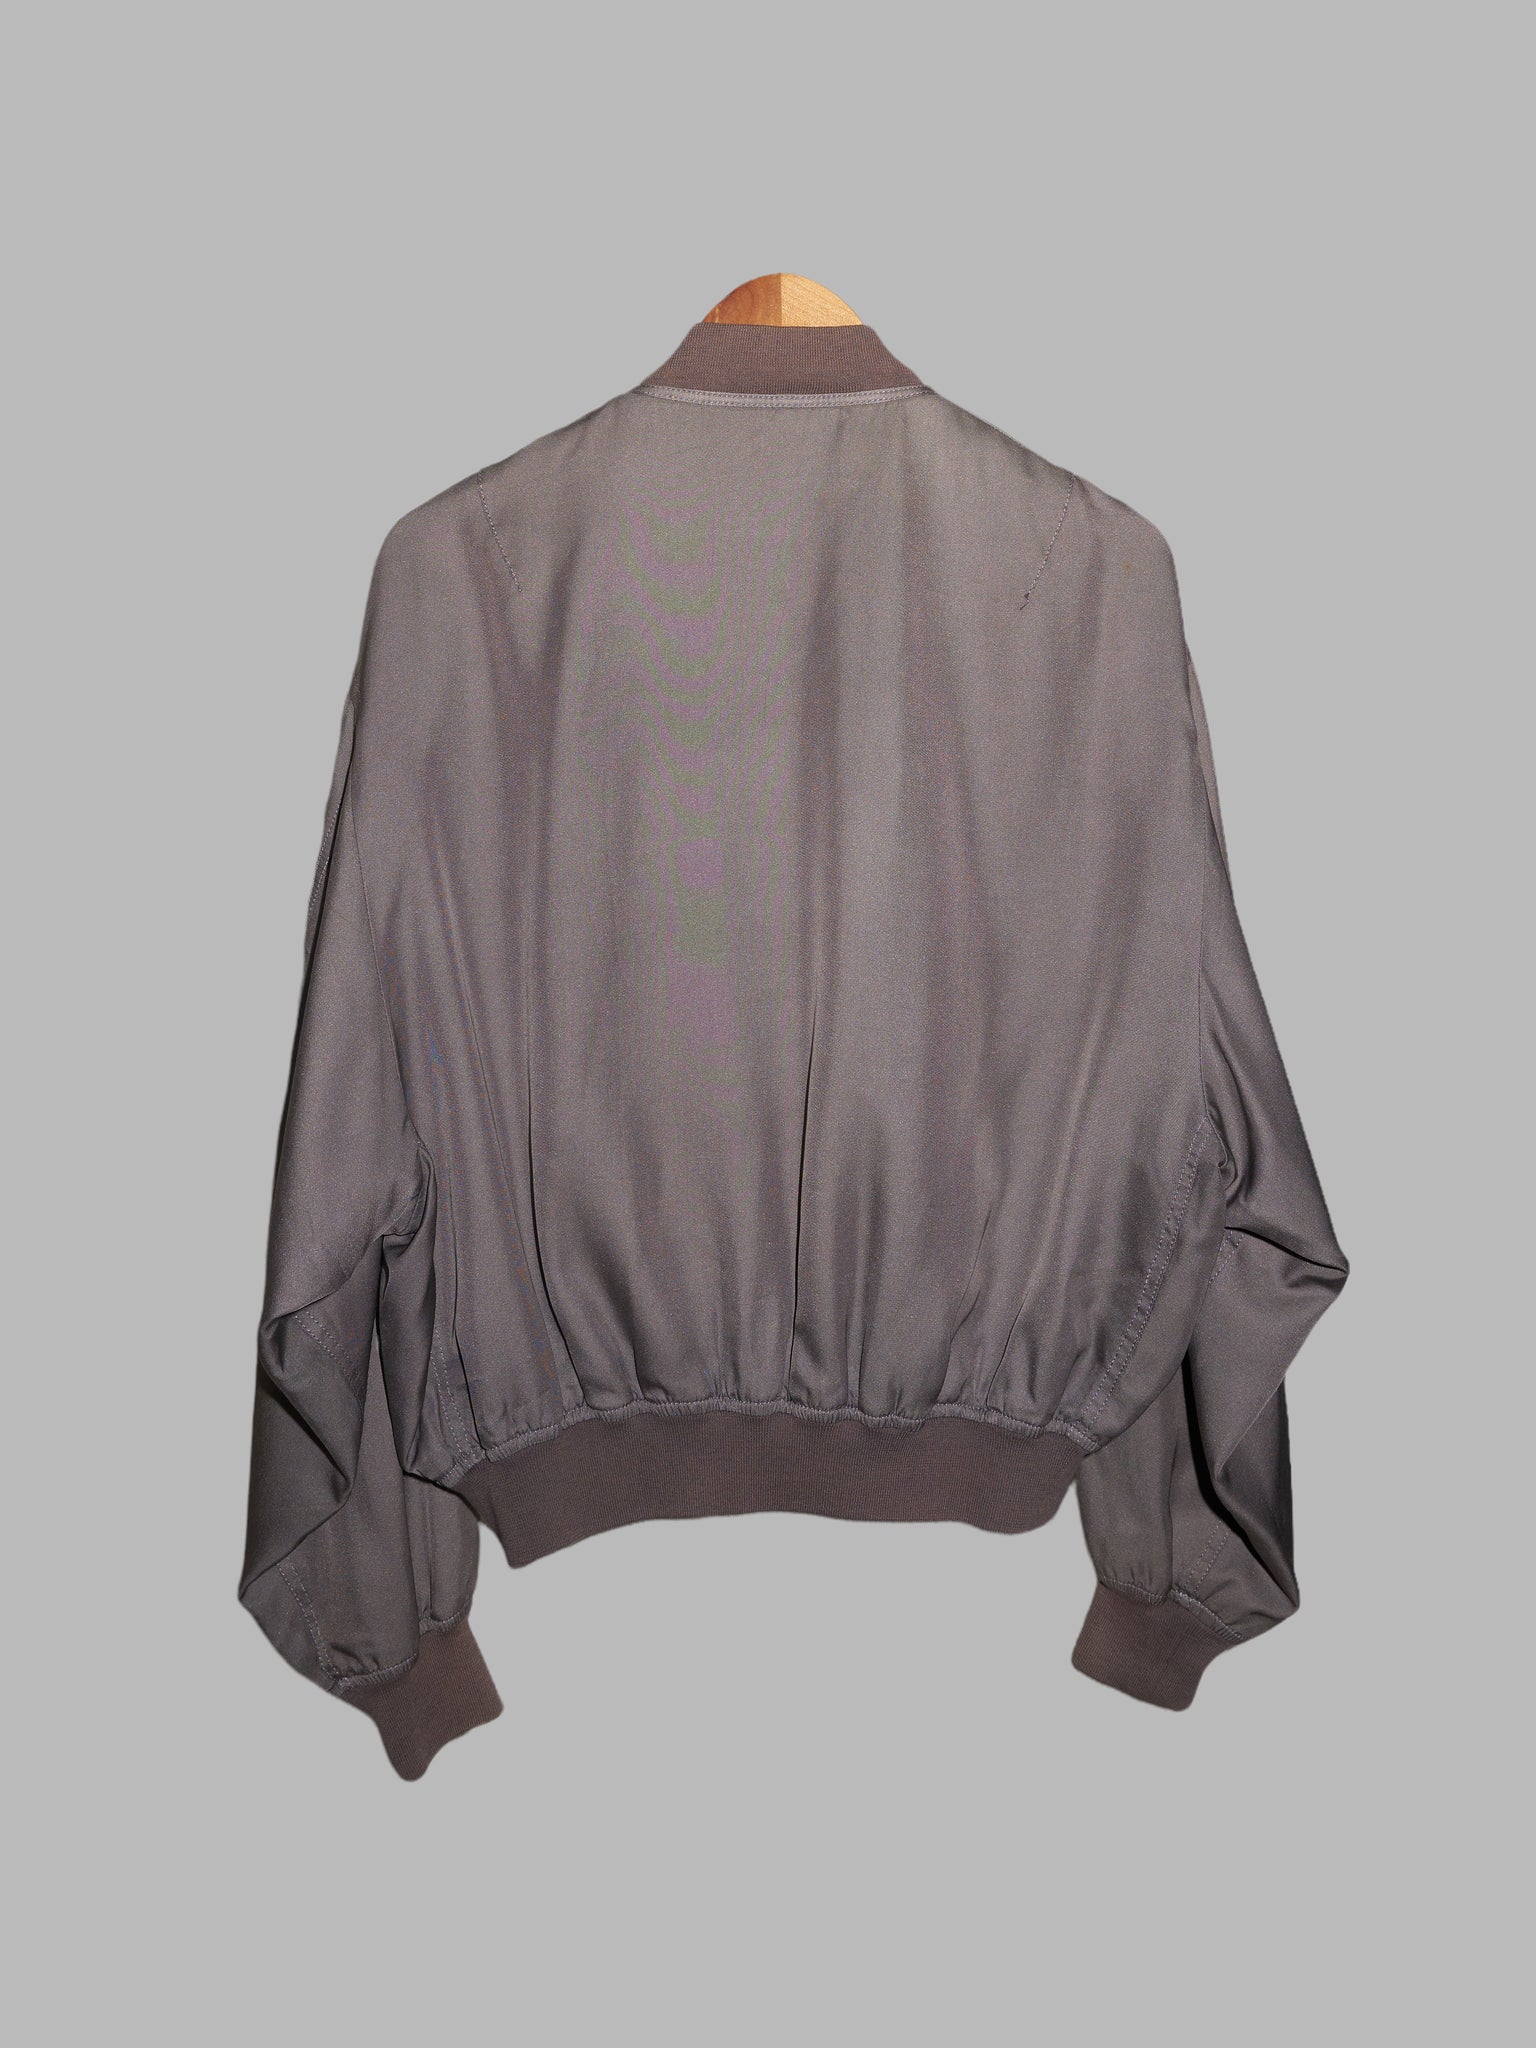 Nigel Cabourn 1990s grey-brown silk MA-1 bomber jacket - size 2 M